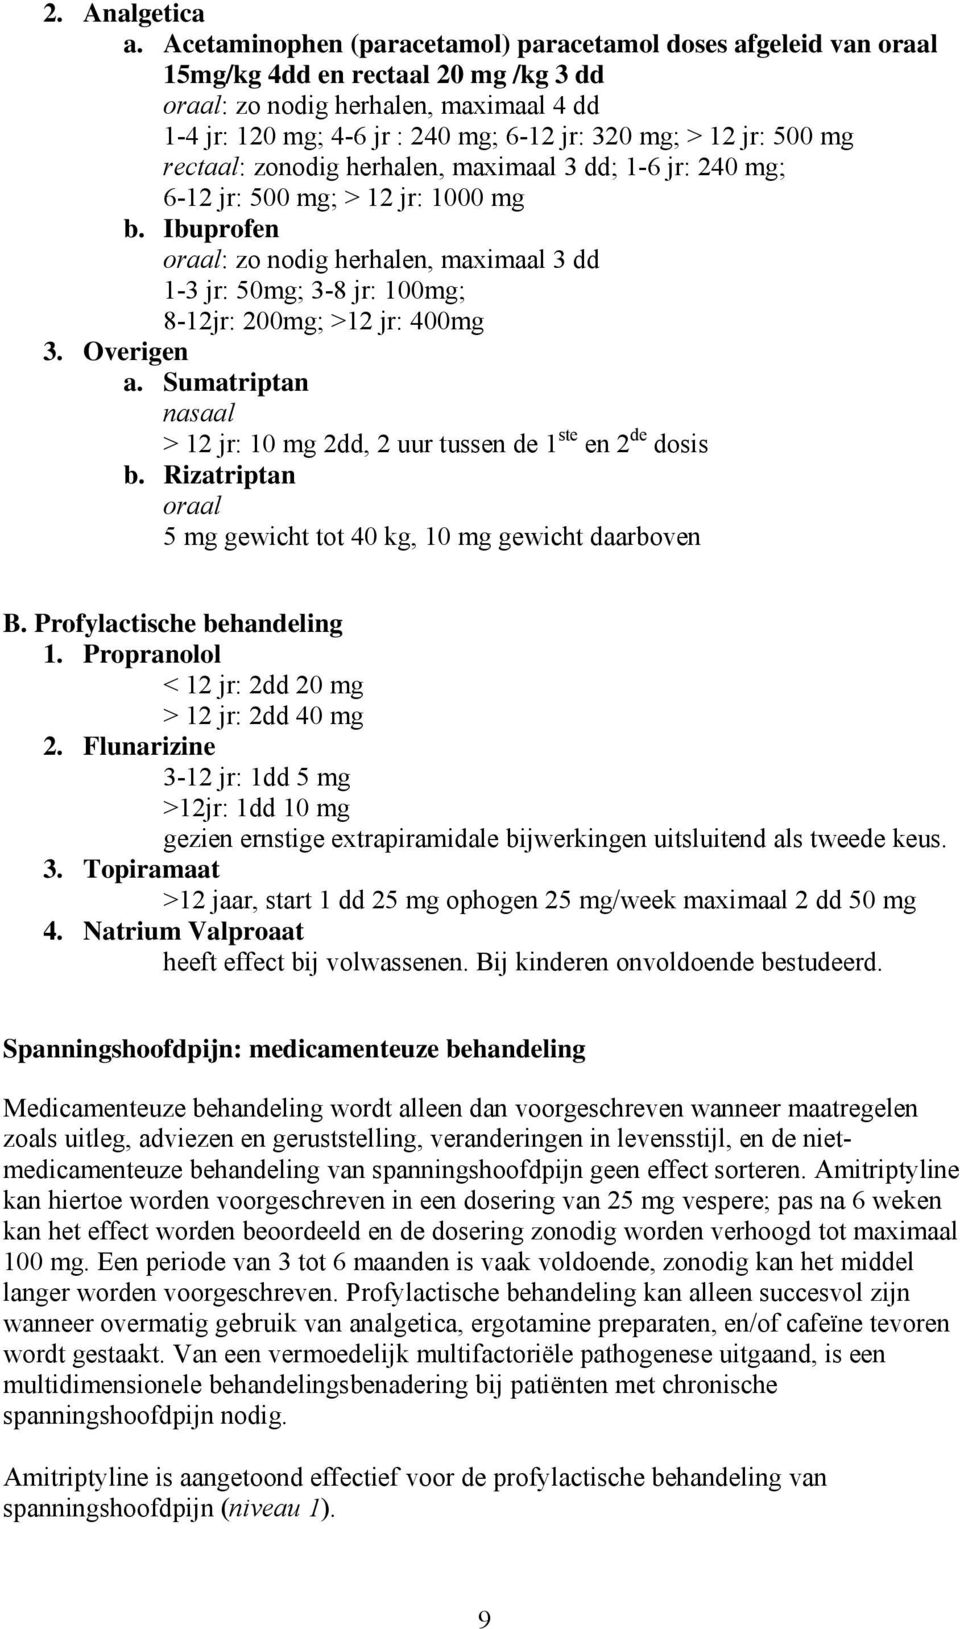 jr: 500 mg rectaal: zonodig herhalen, maximaal 3 dd; 1-6 jr: 240 mg; 6-12 jr: 500 mg; > 12 jr: 1000 mg b.